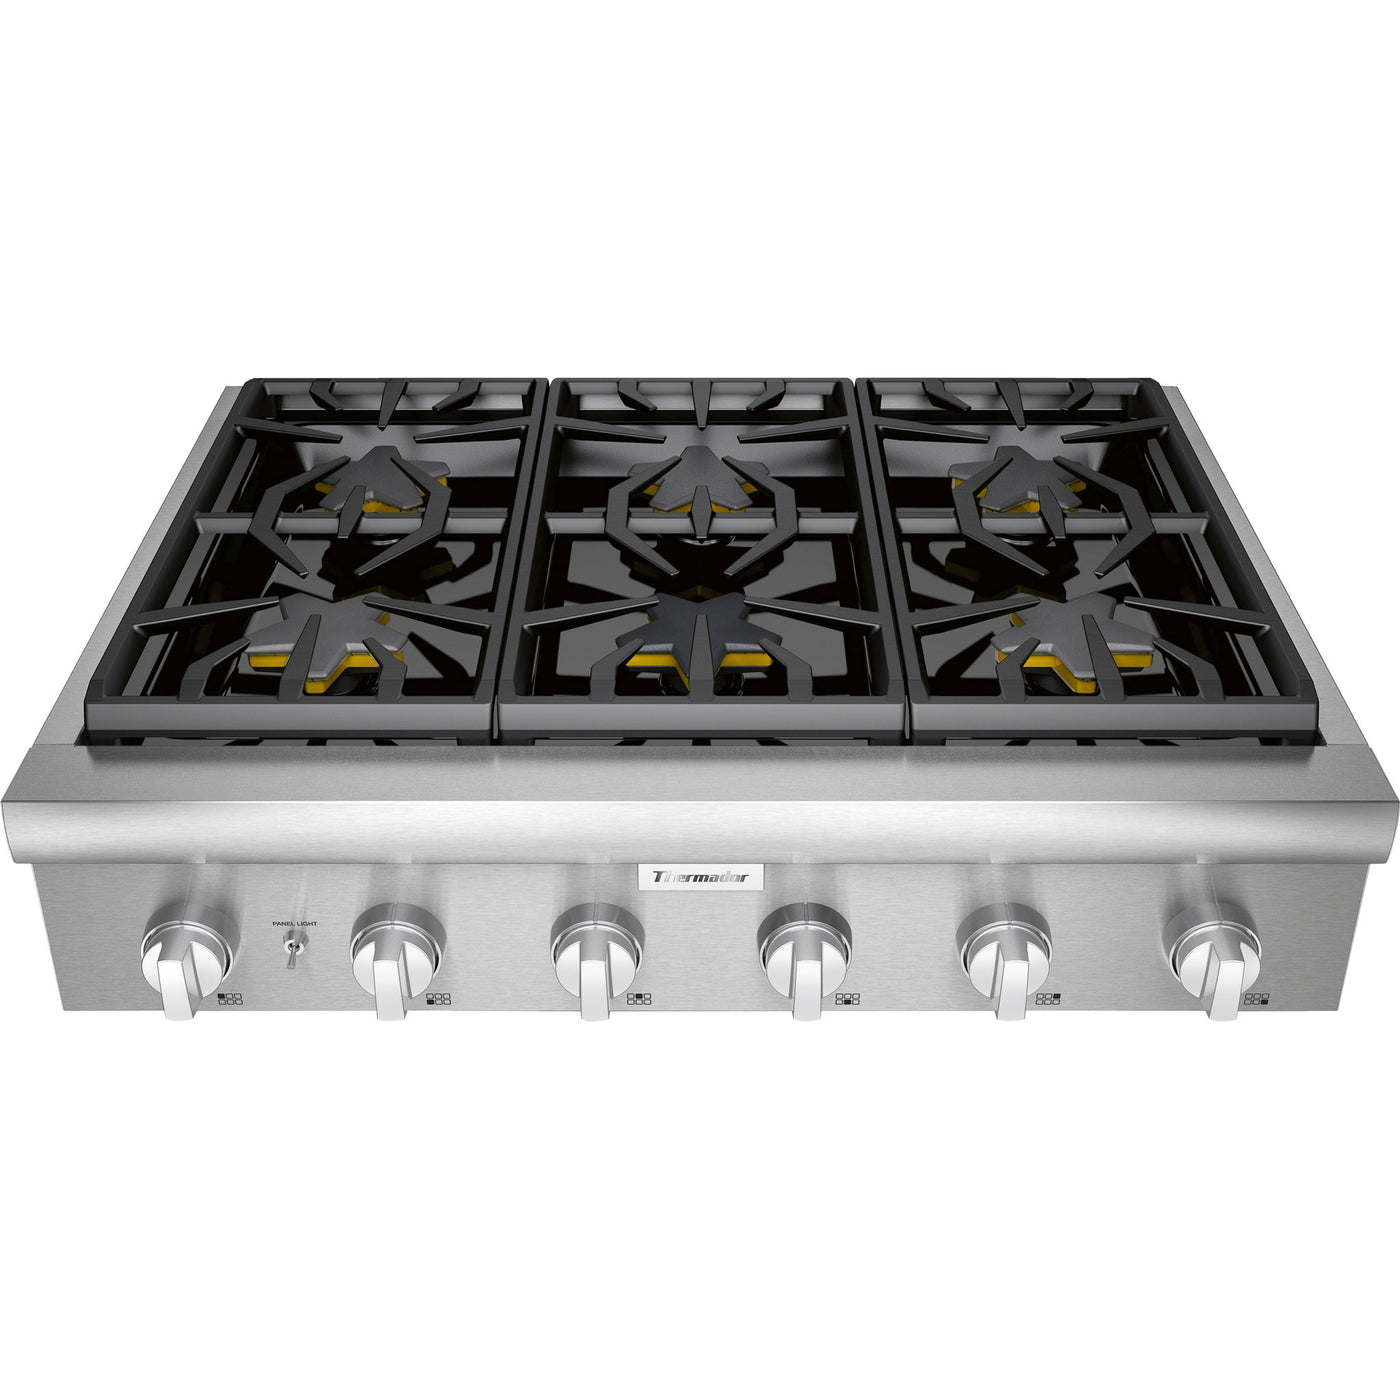 thermador-range-PCG366W-gas cooktop